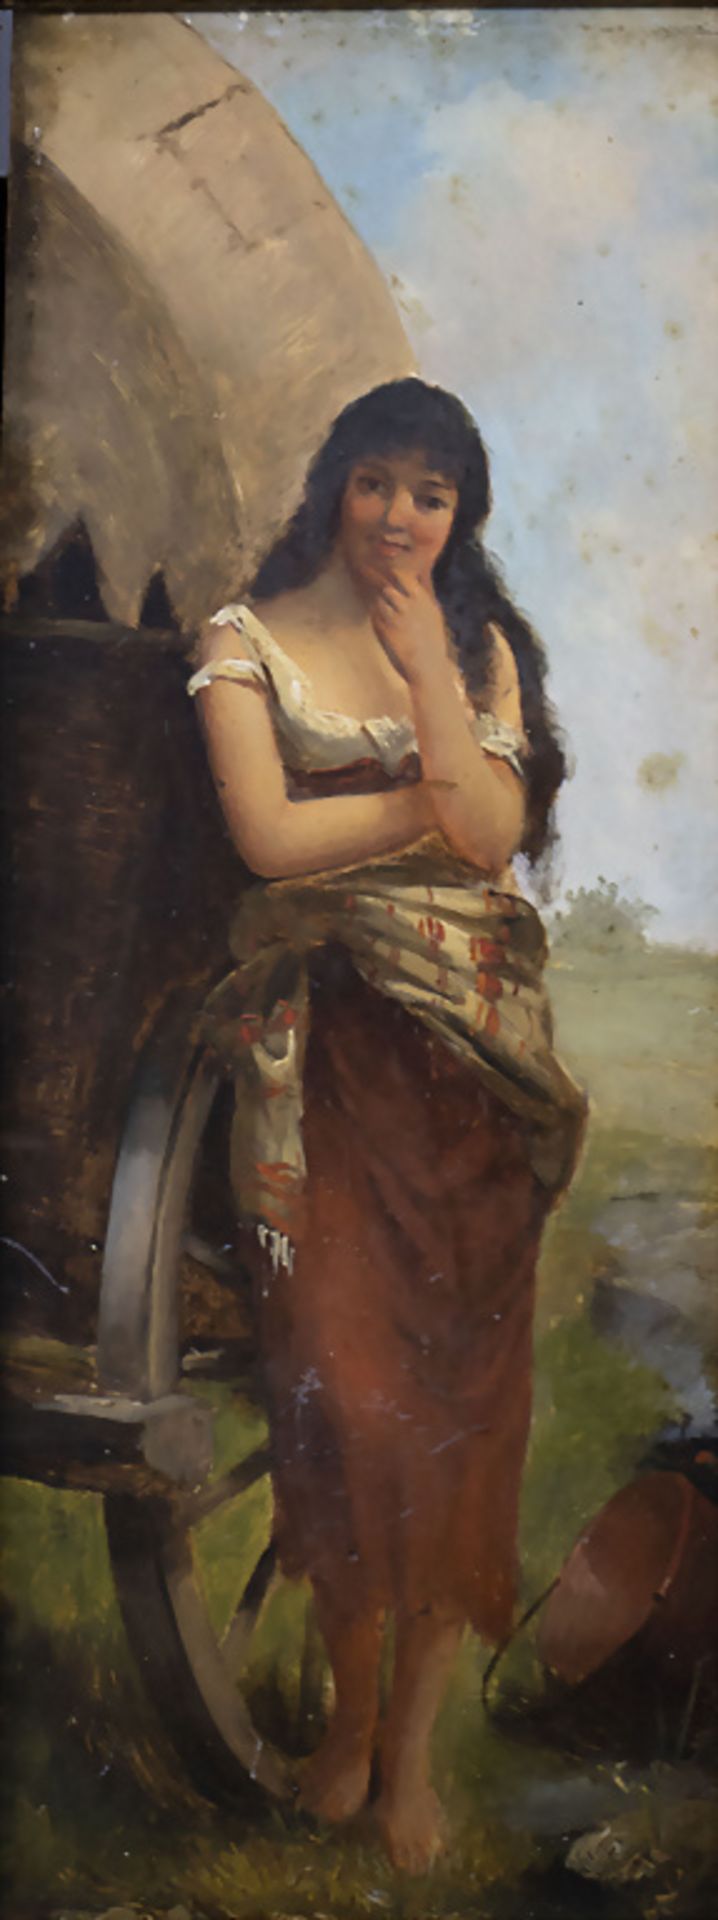 Künstler des 19. Jh., 'Zigeunerin' / Artist of the 19th century, 'Gypsy woman'